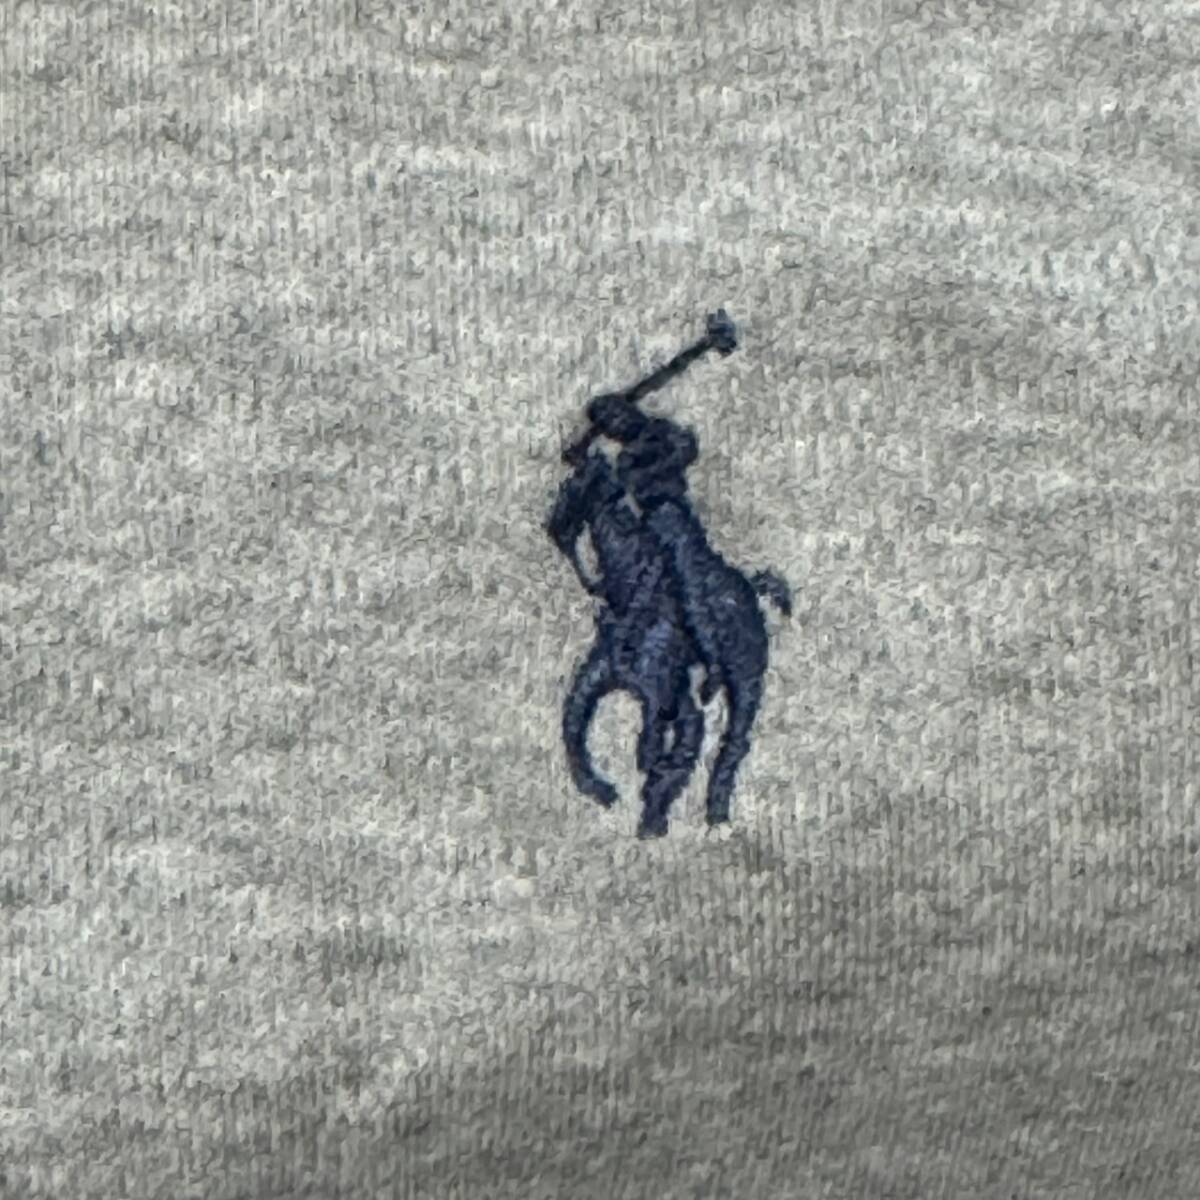  Ralph Lauren рубашка-поло Spo колено вышивка серый Polo